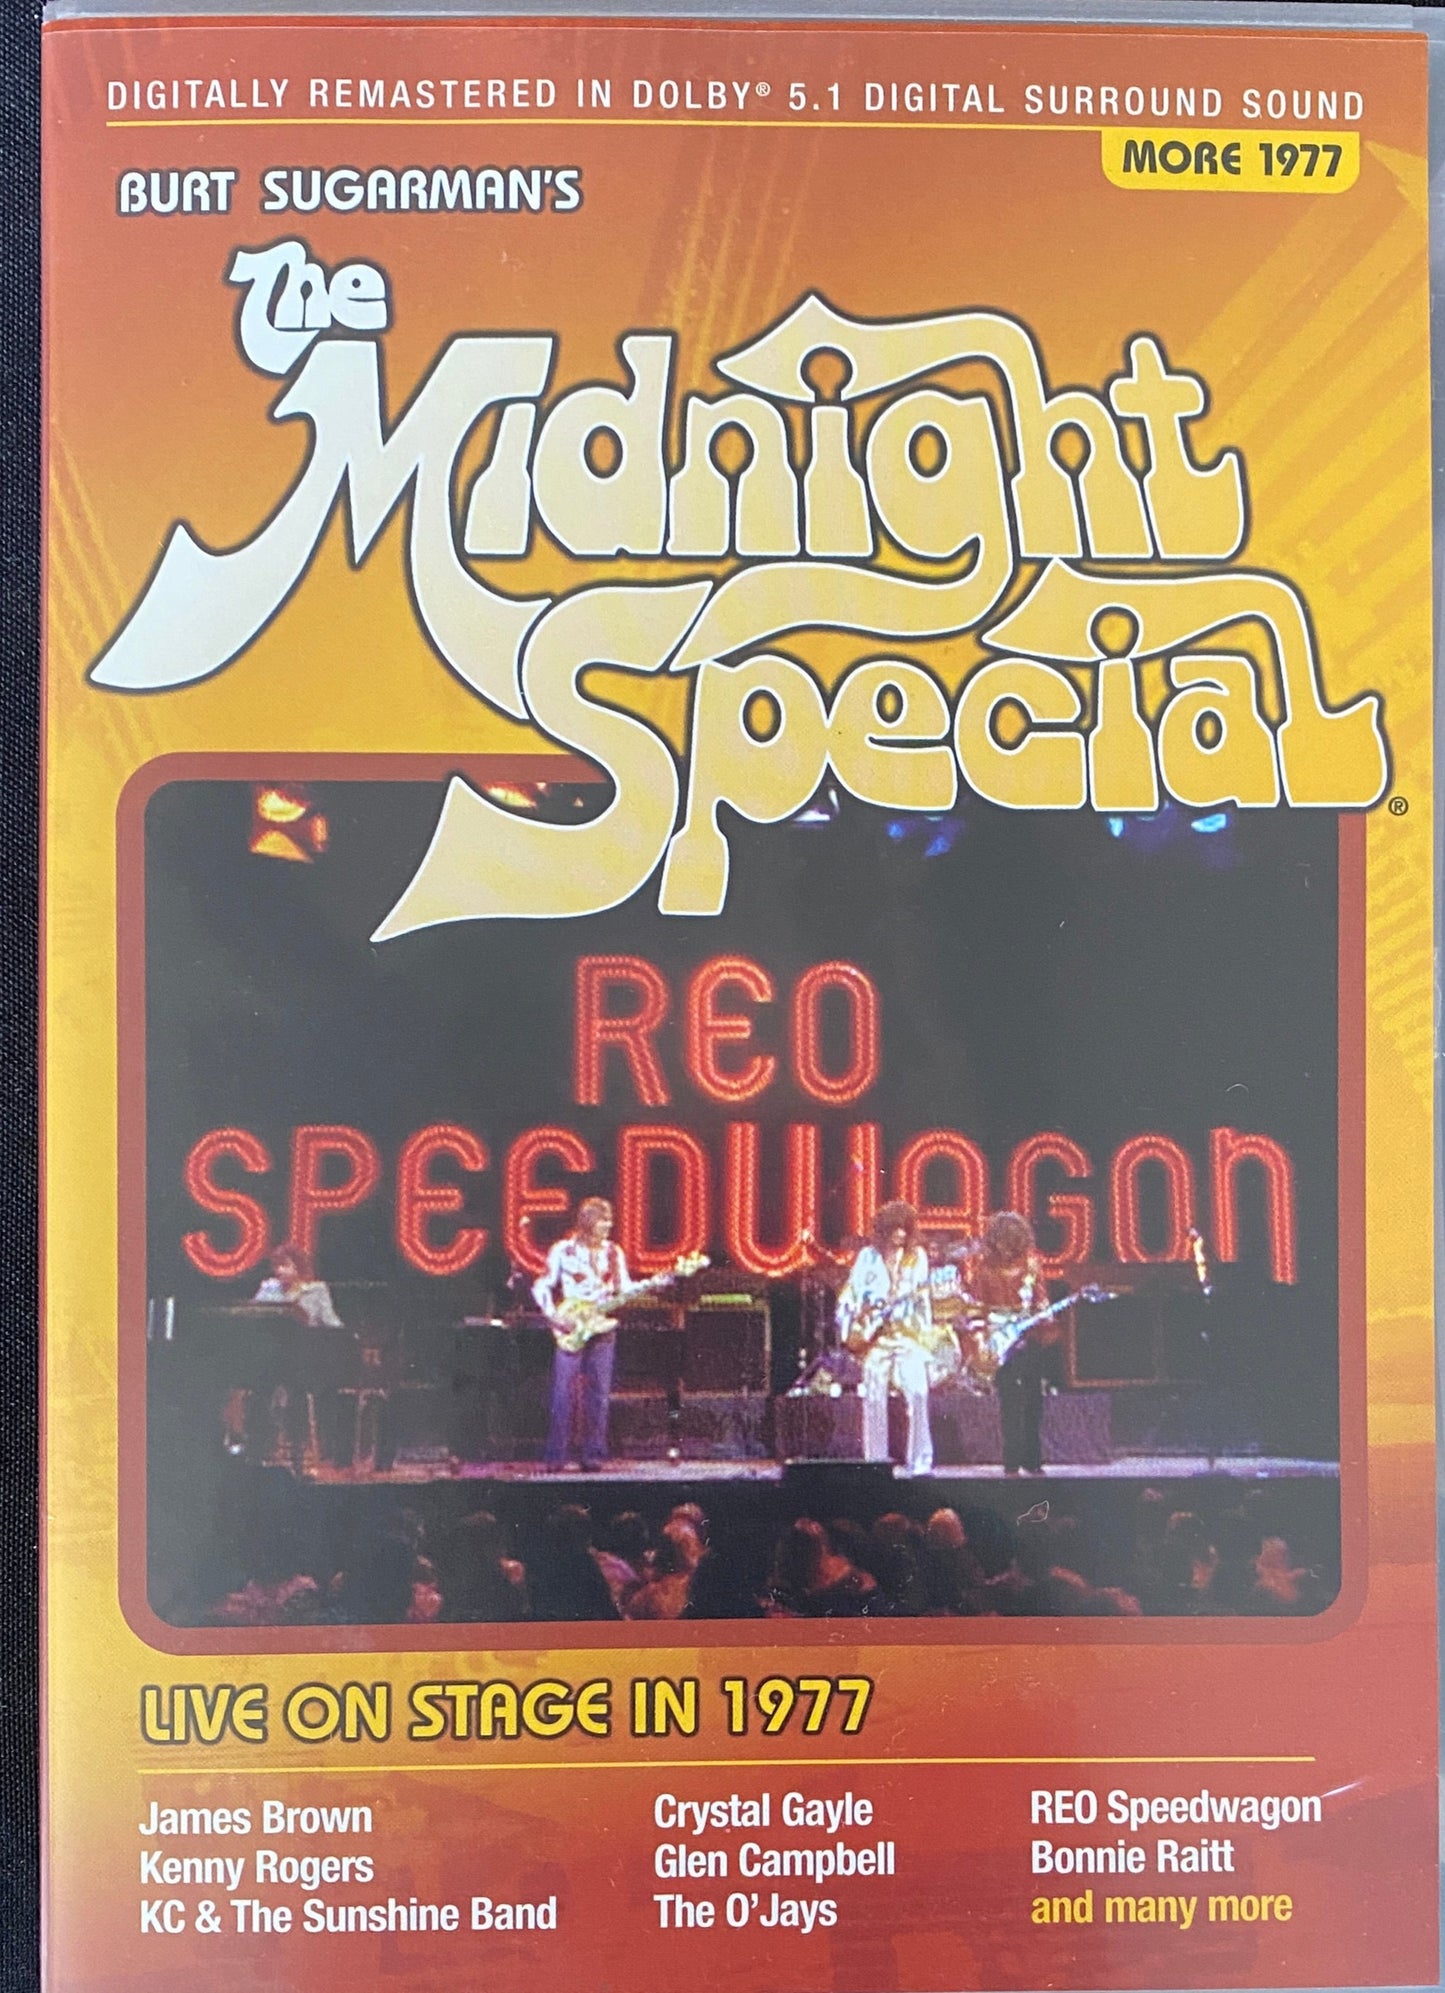 Burt Sugarman's The Midnight Special Live - More 1977